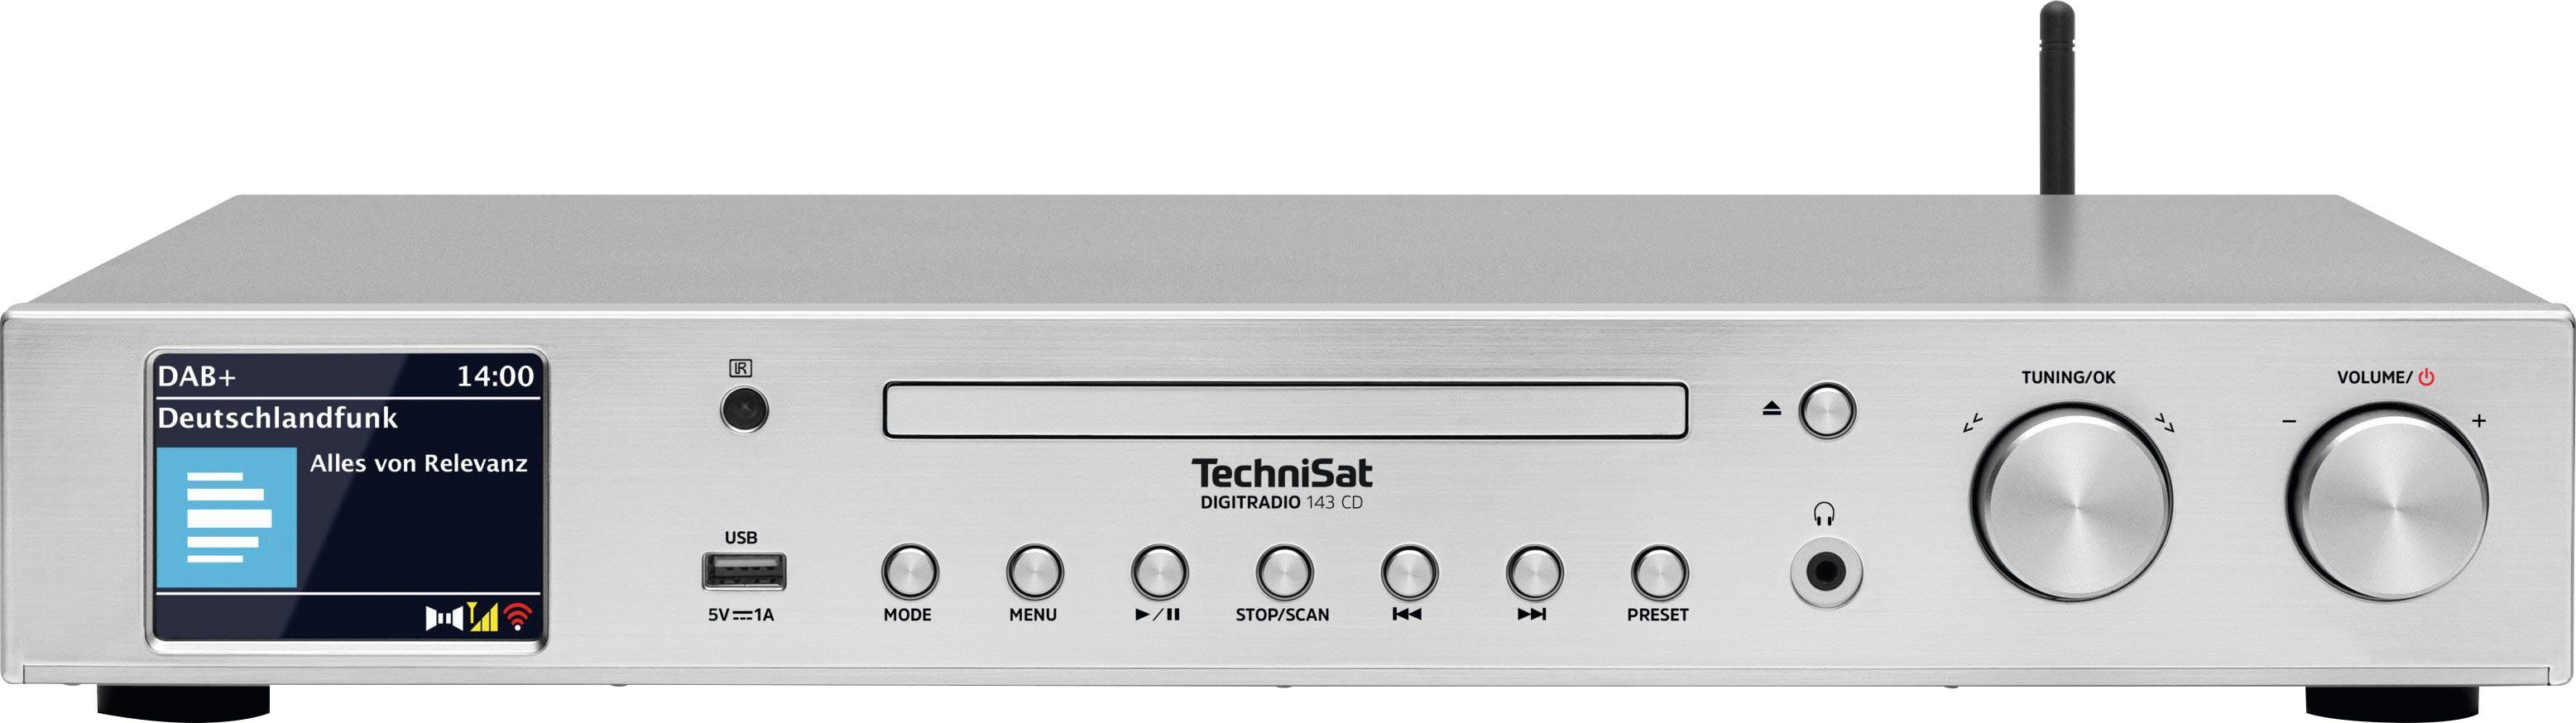 TechniSat DIGITRADIO (Digitalradio (DAB) Digitalradio 143 silber Internetradio, RDS) mit UKW (DAB), CD (V3)